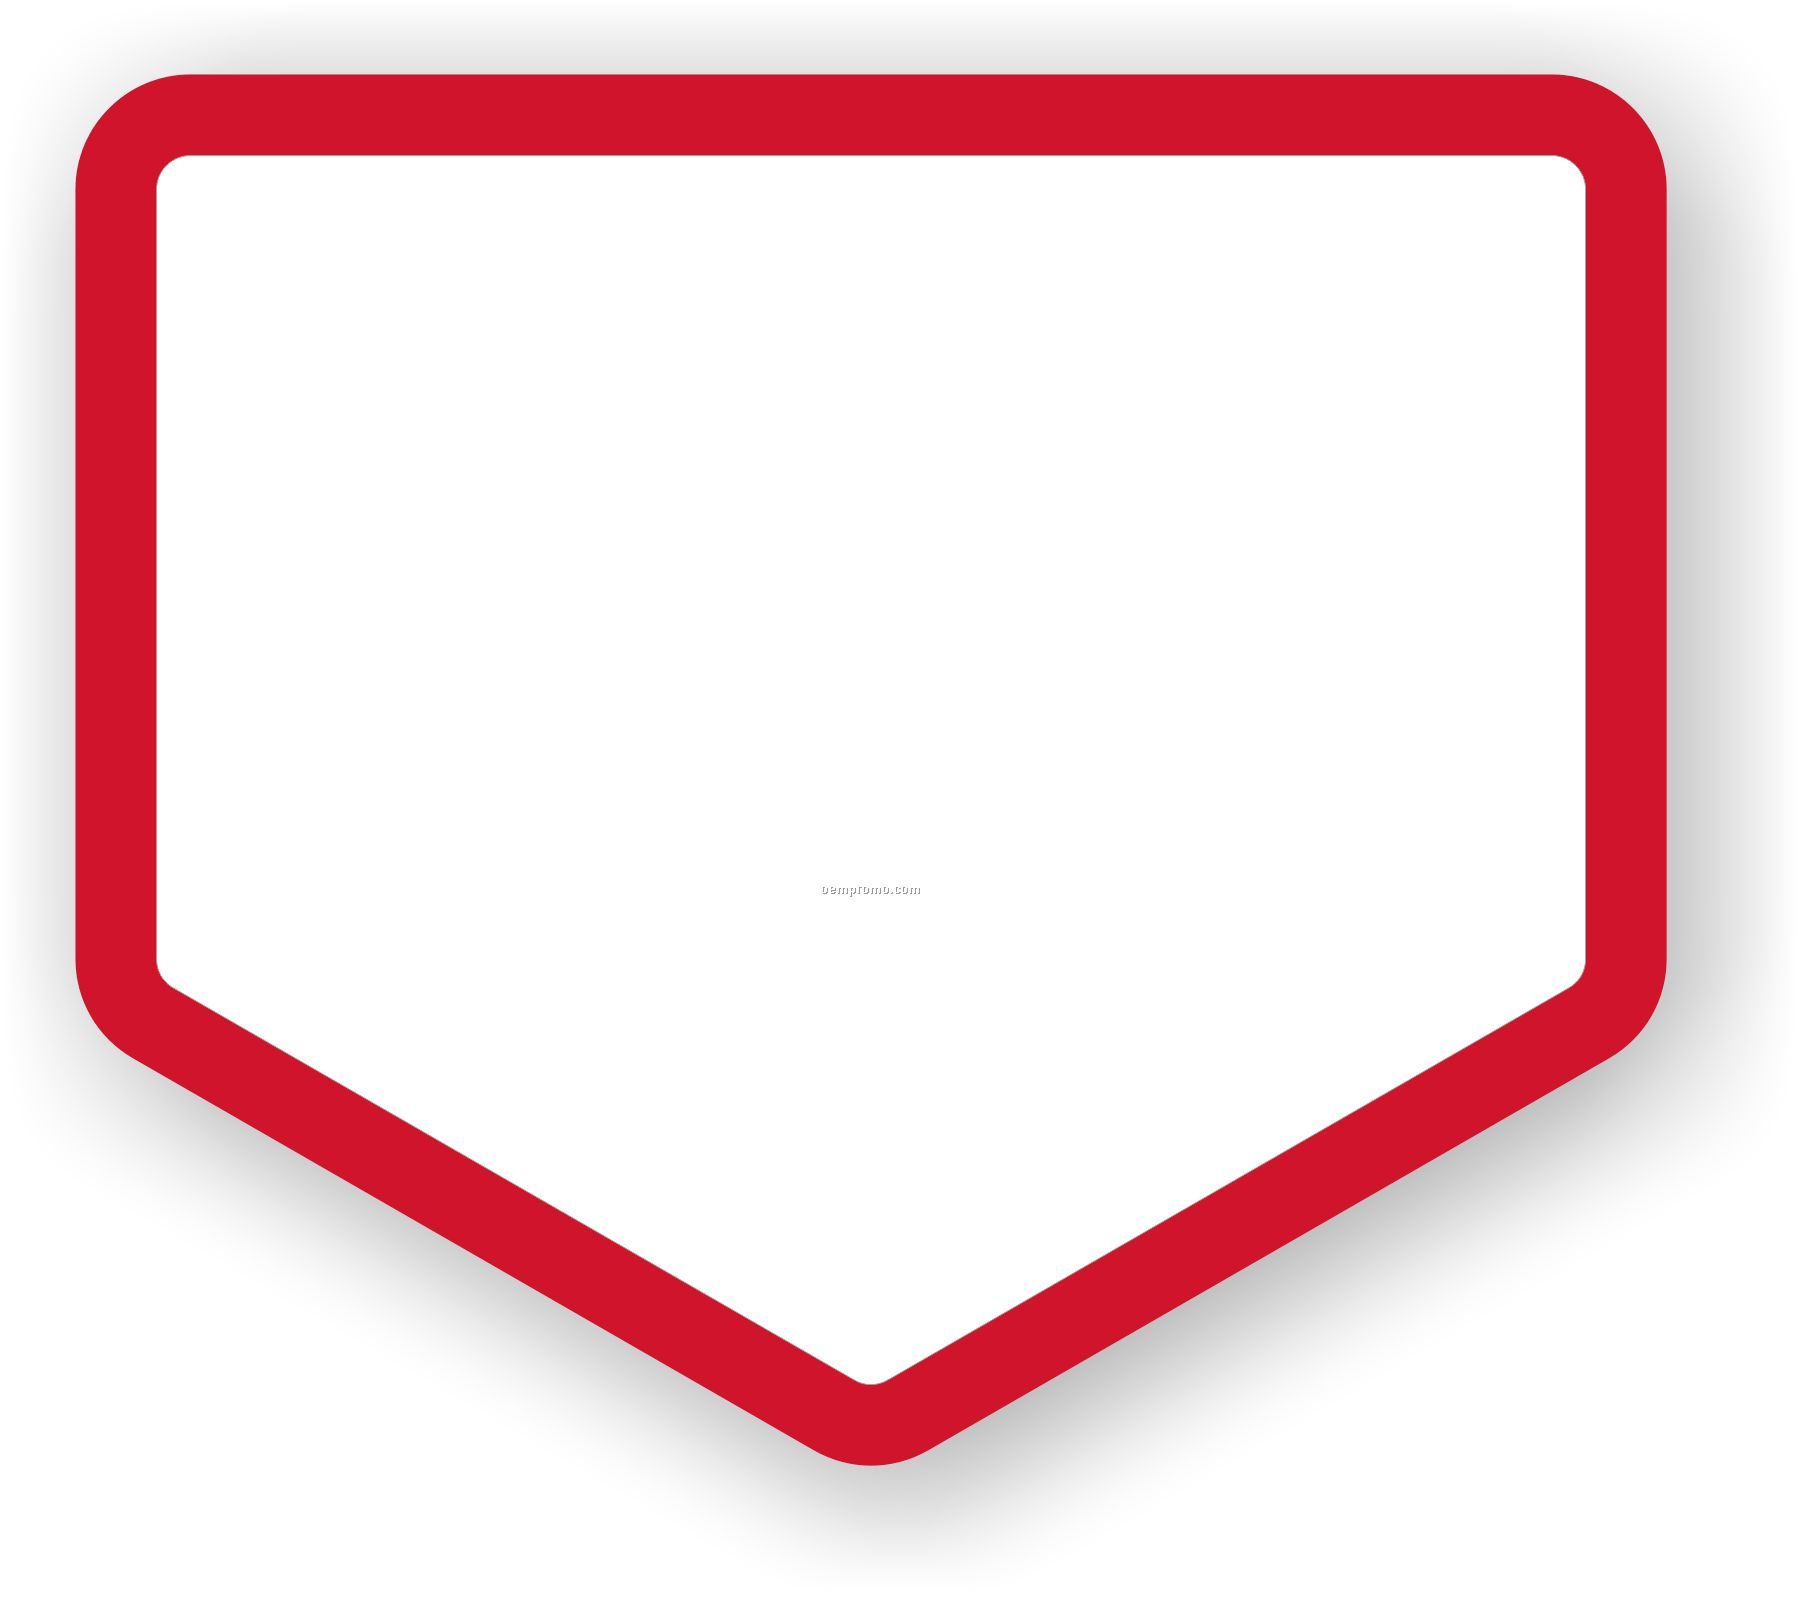 Home plate baseball clipart